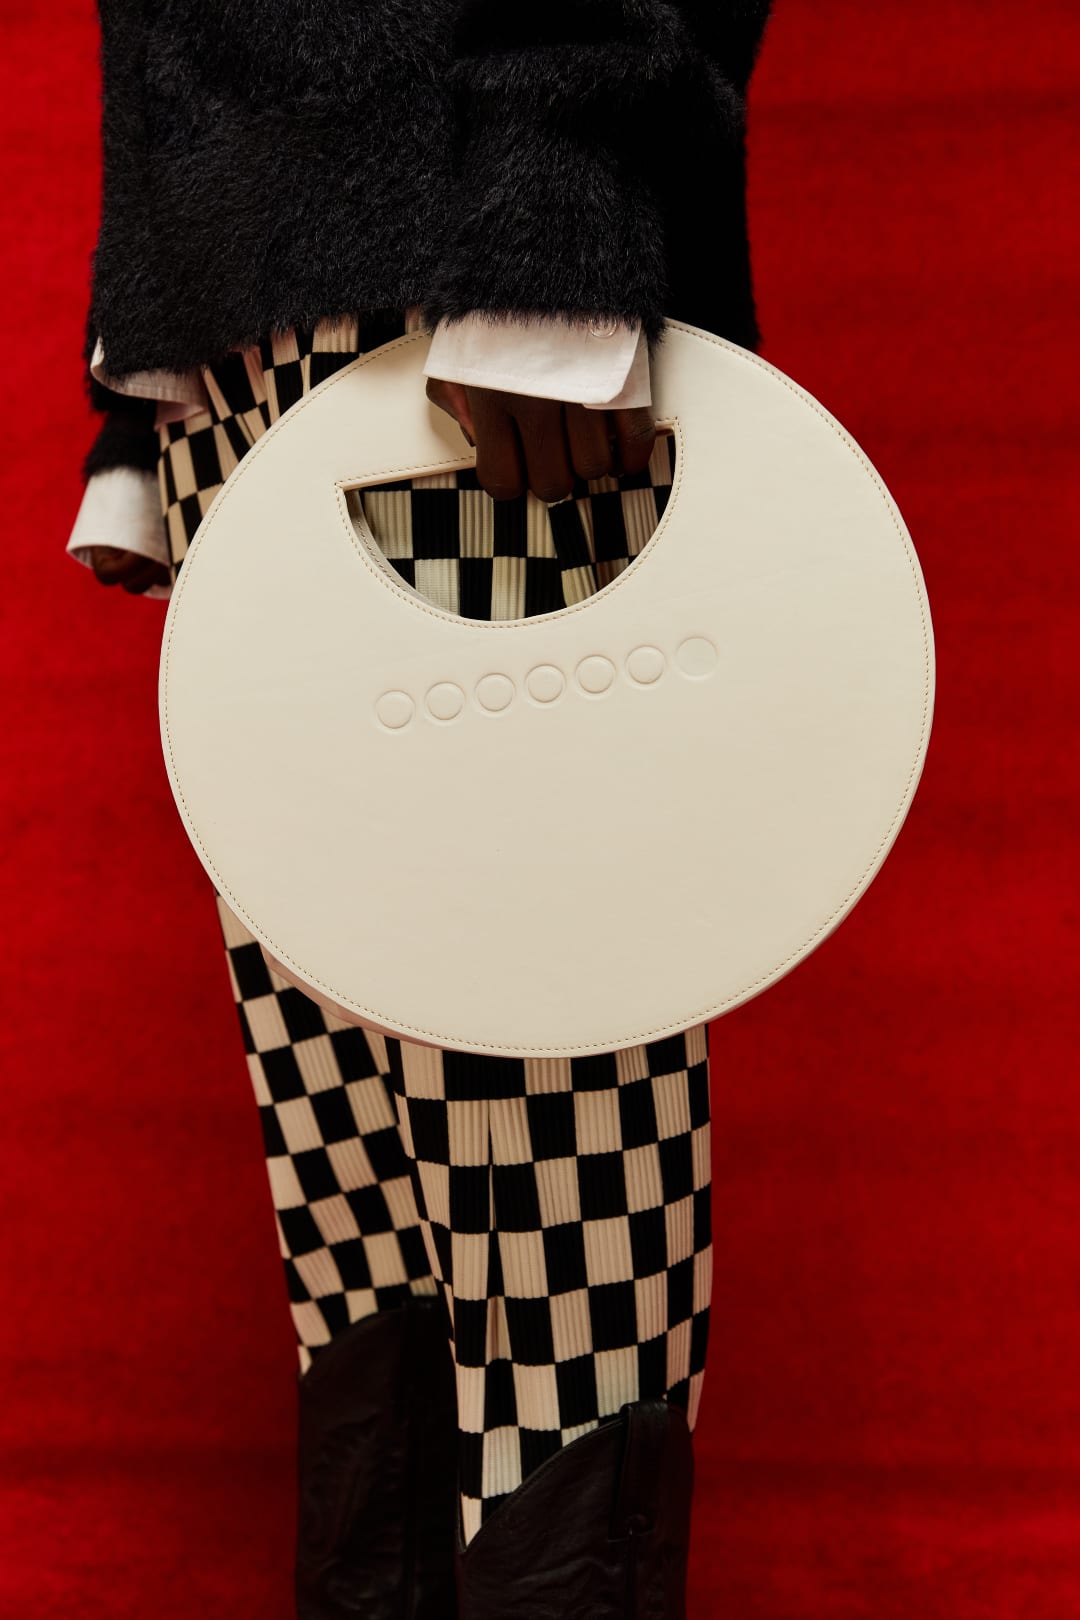 A model holding a white circle-shaped bag